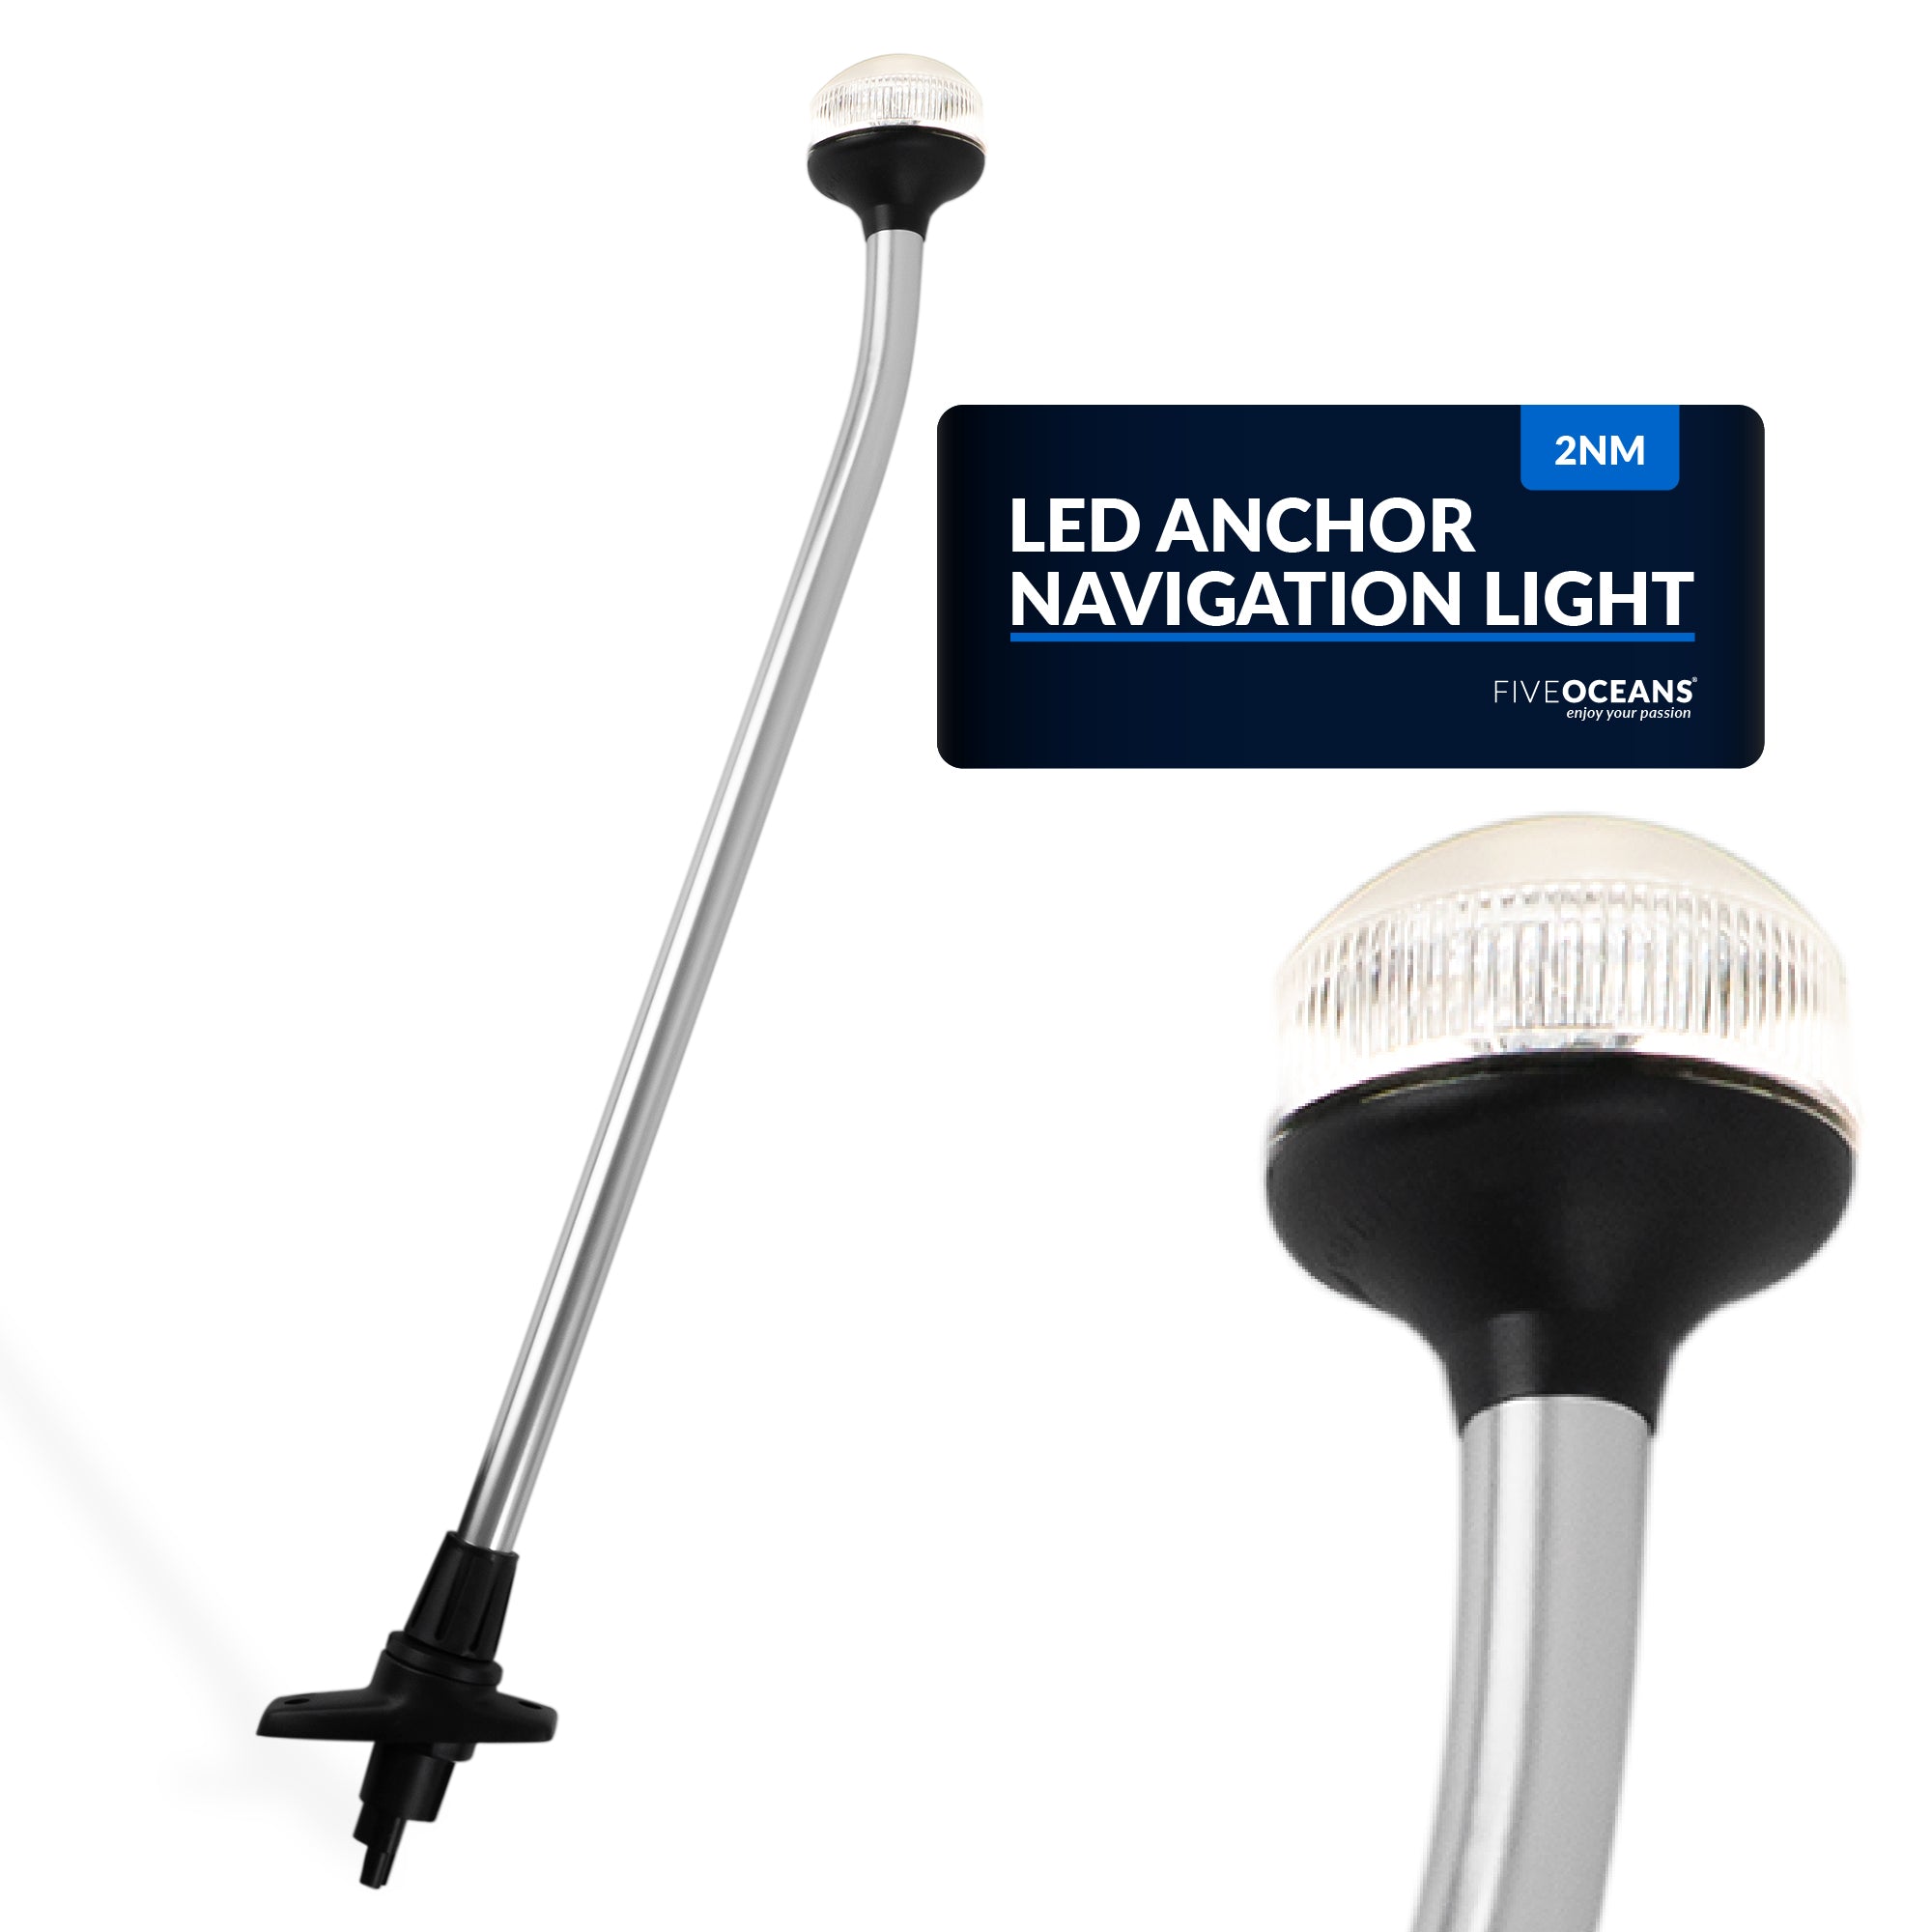 LED Anchor Navigation Lights, Removable Boat Light Pole, USCG 2NM, 24 Inch - FO1883